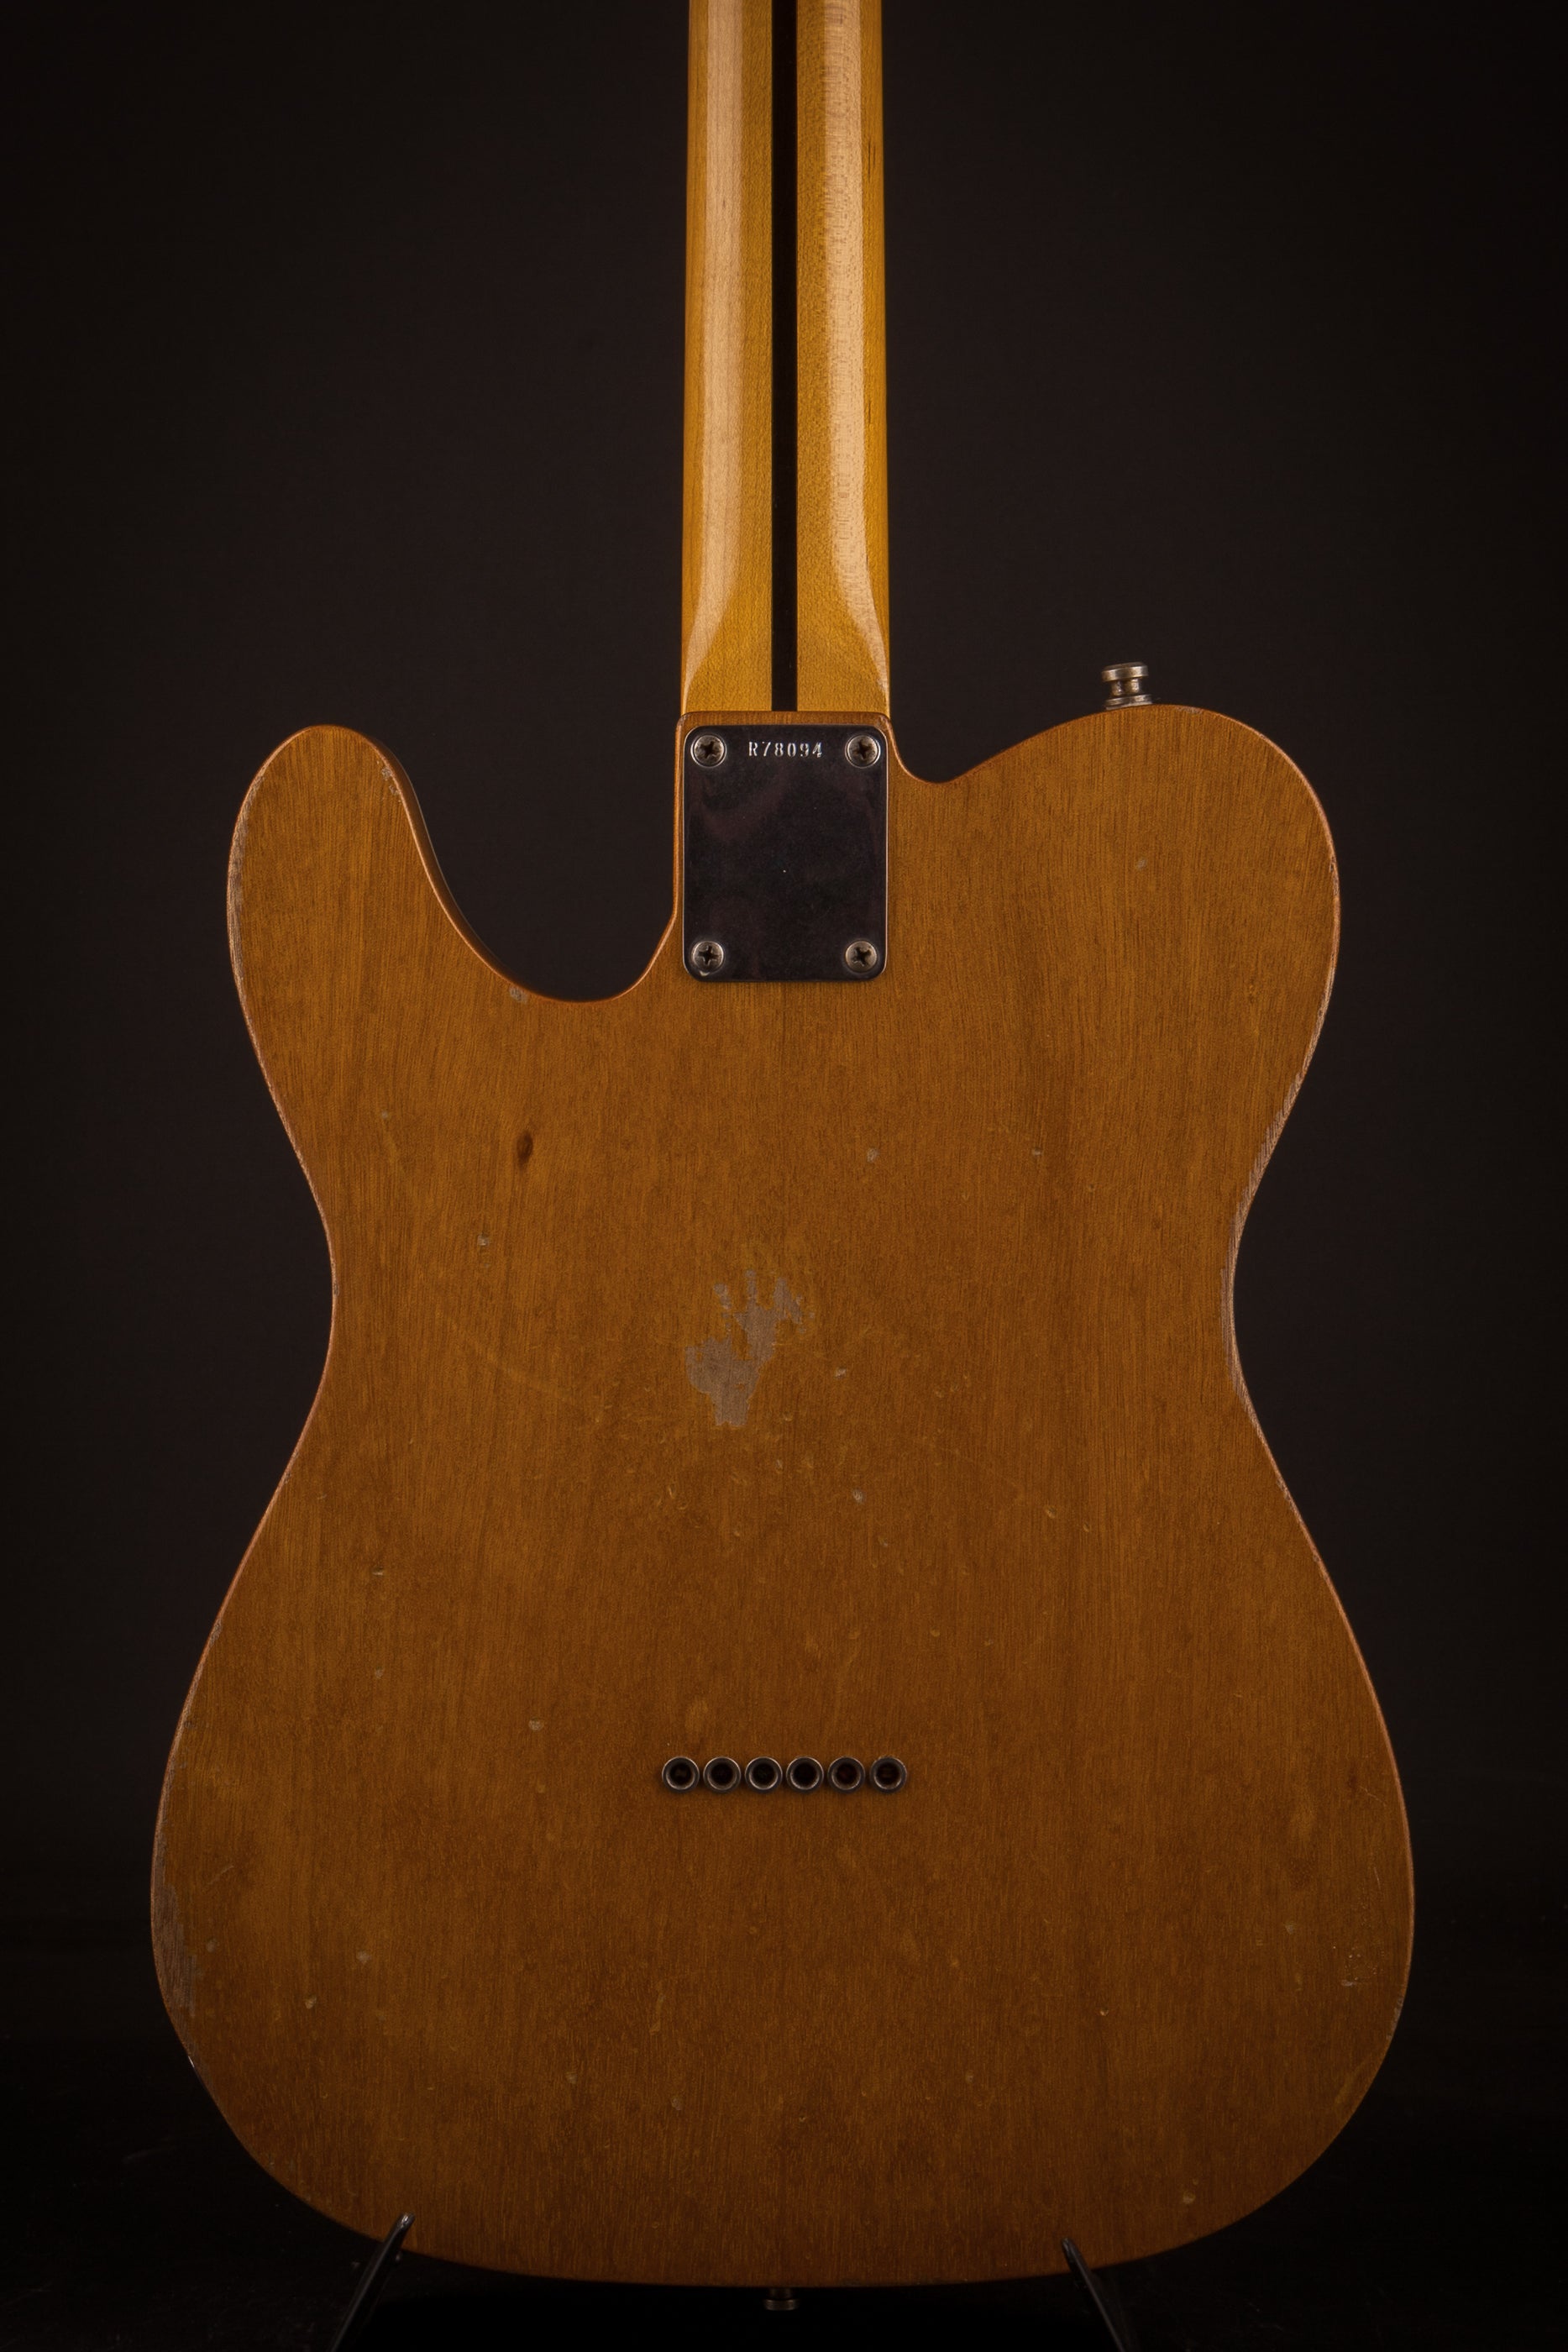 Fender Custom Shop: Double TV Jones Tele Relic 3-Tone Sunburst w/ Natural Back #78094